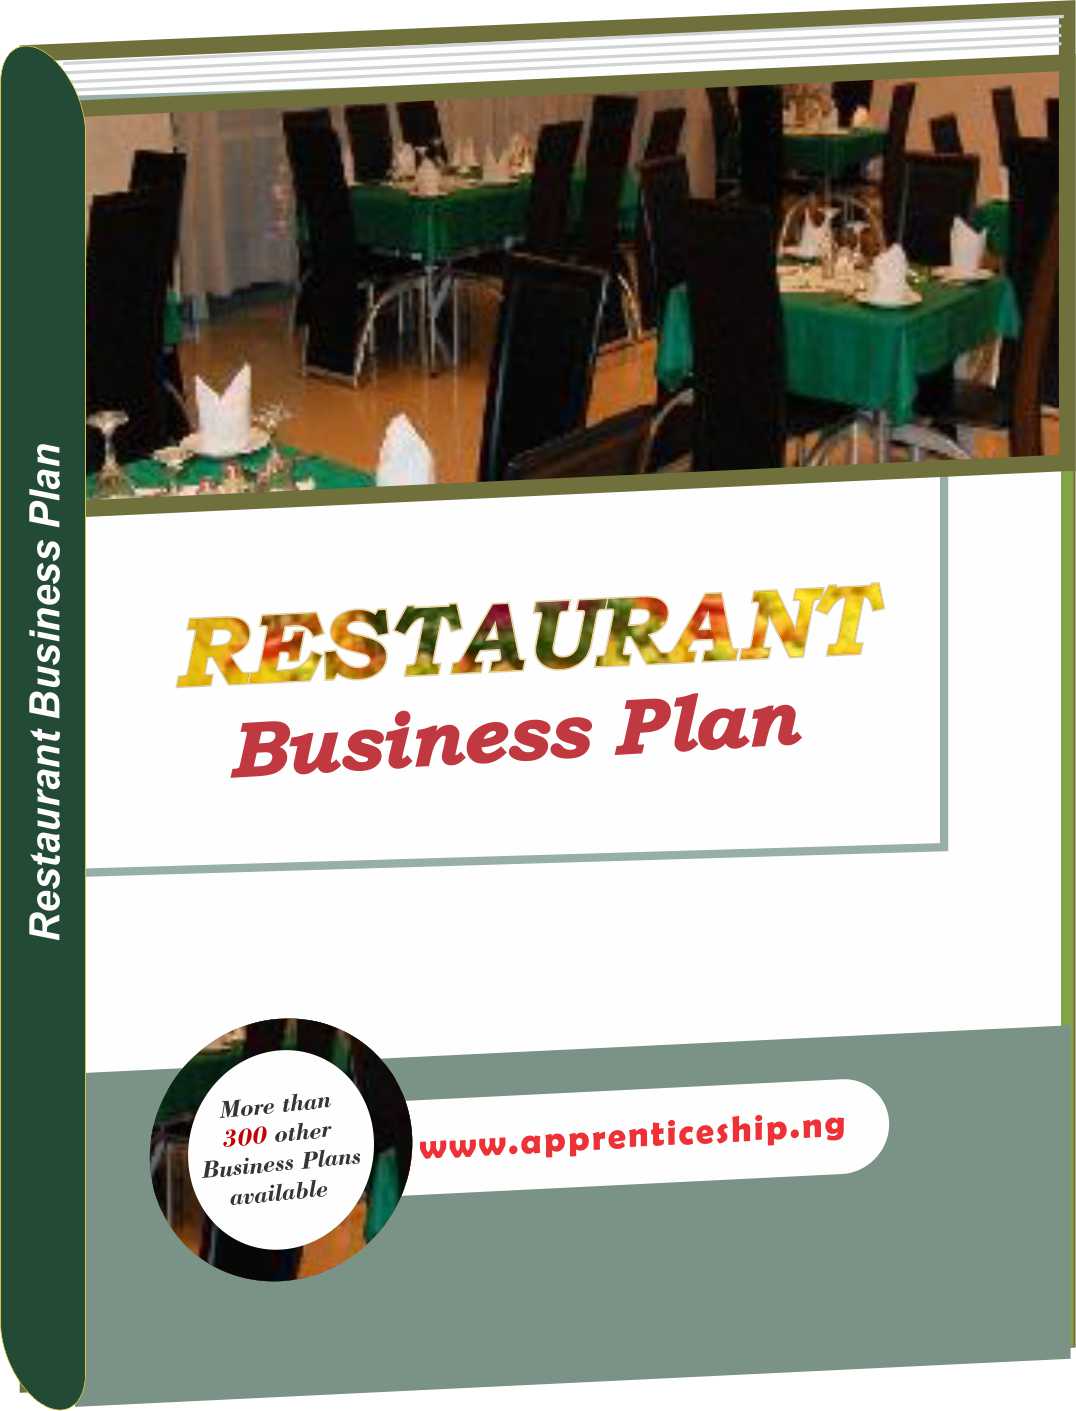 business plan for restaurant in nigeria